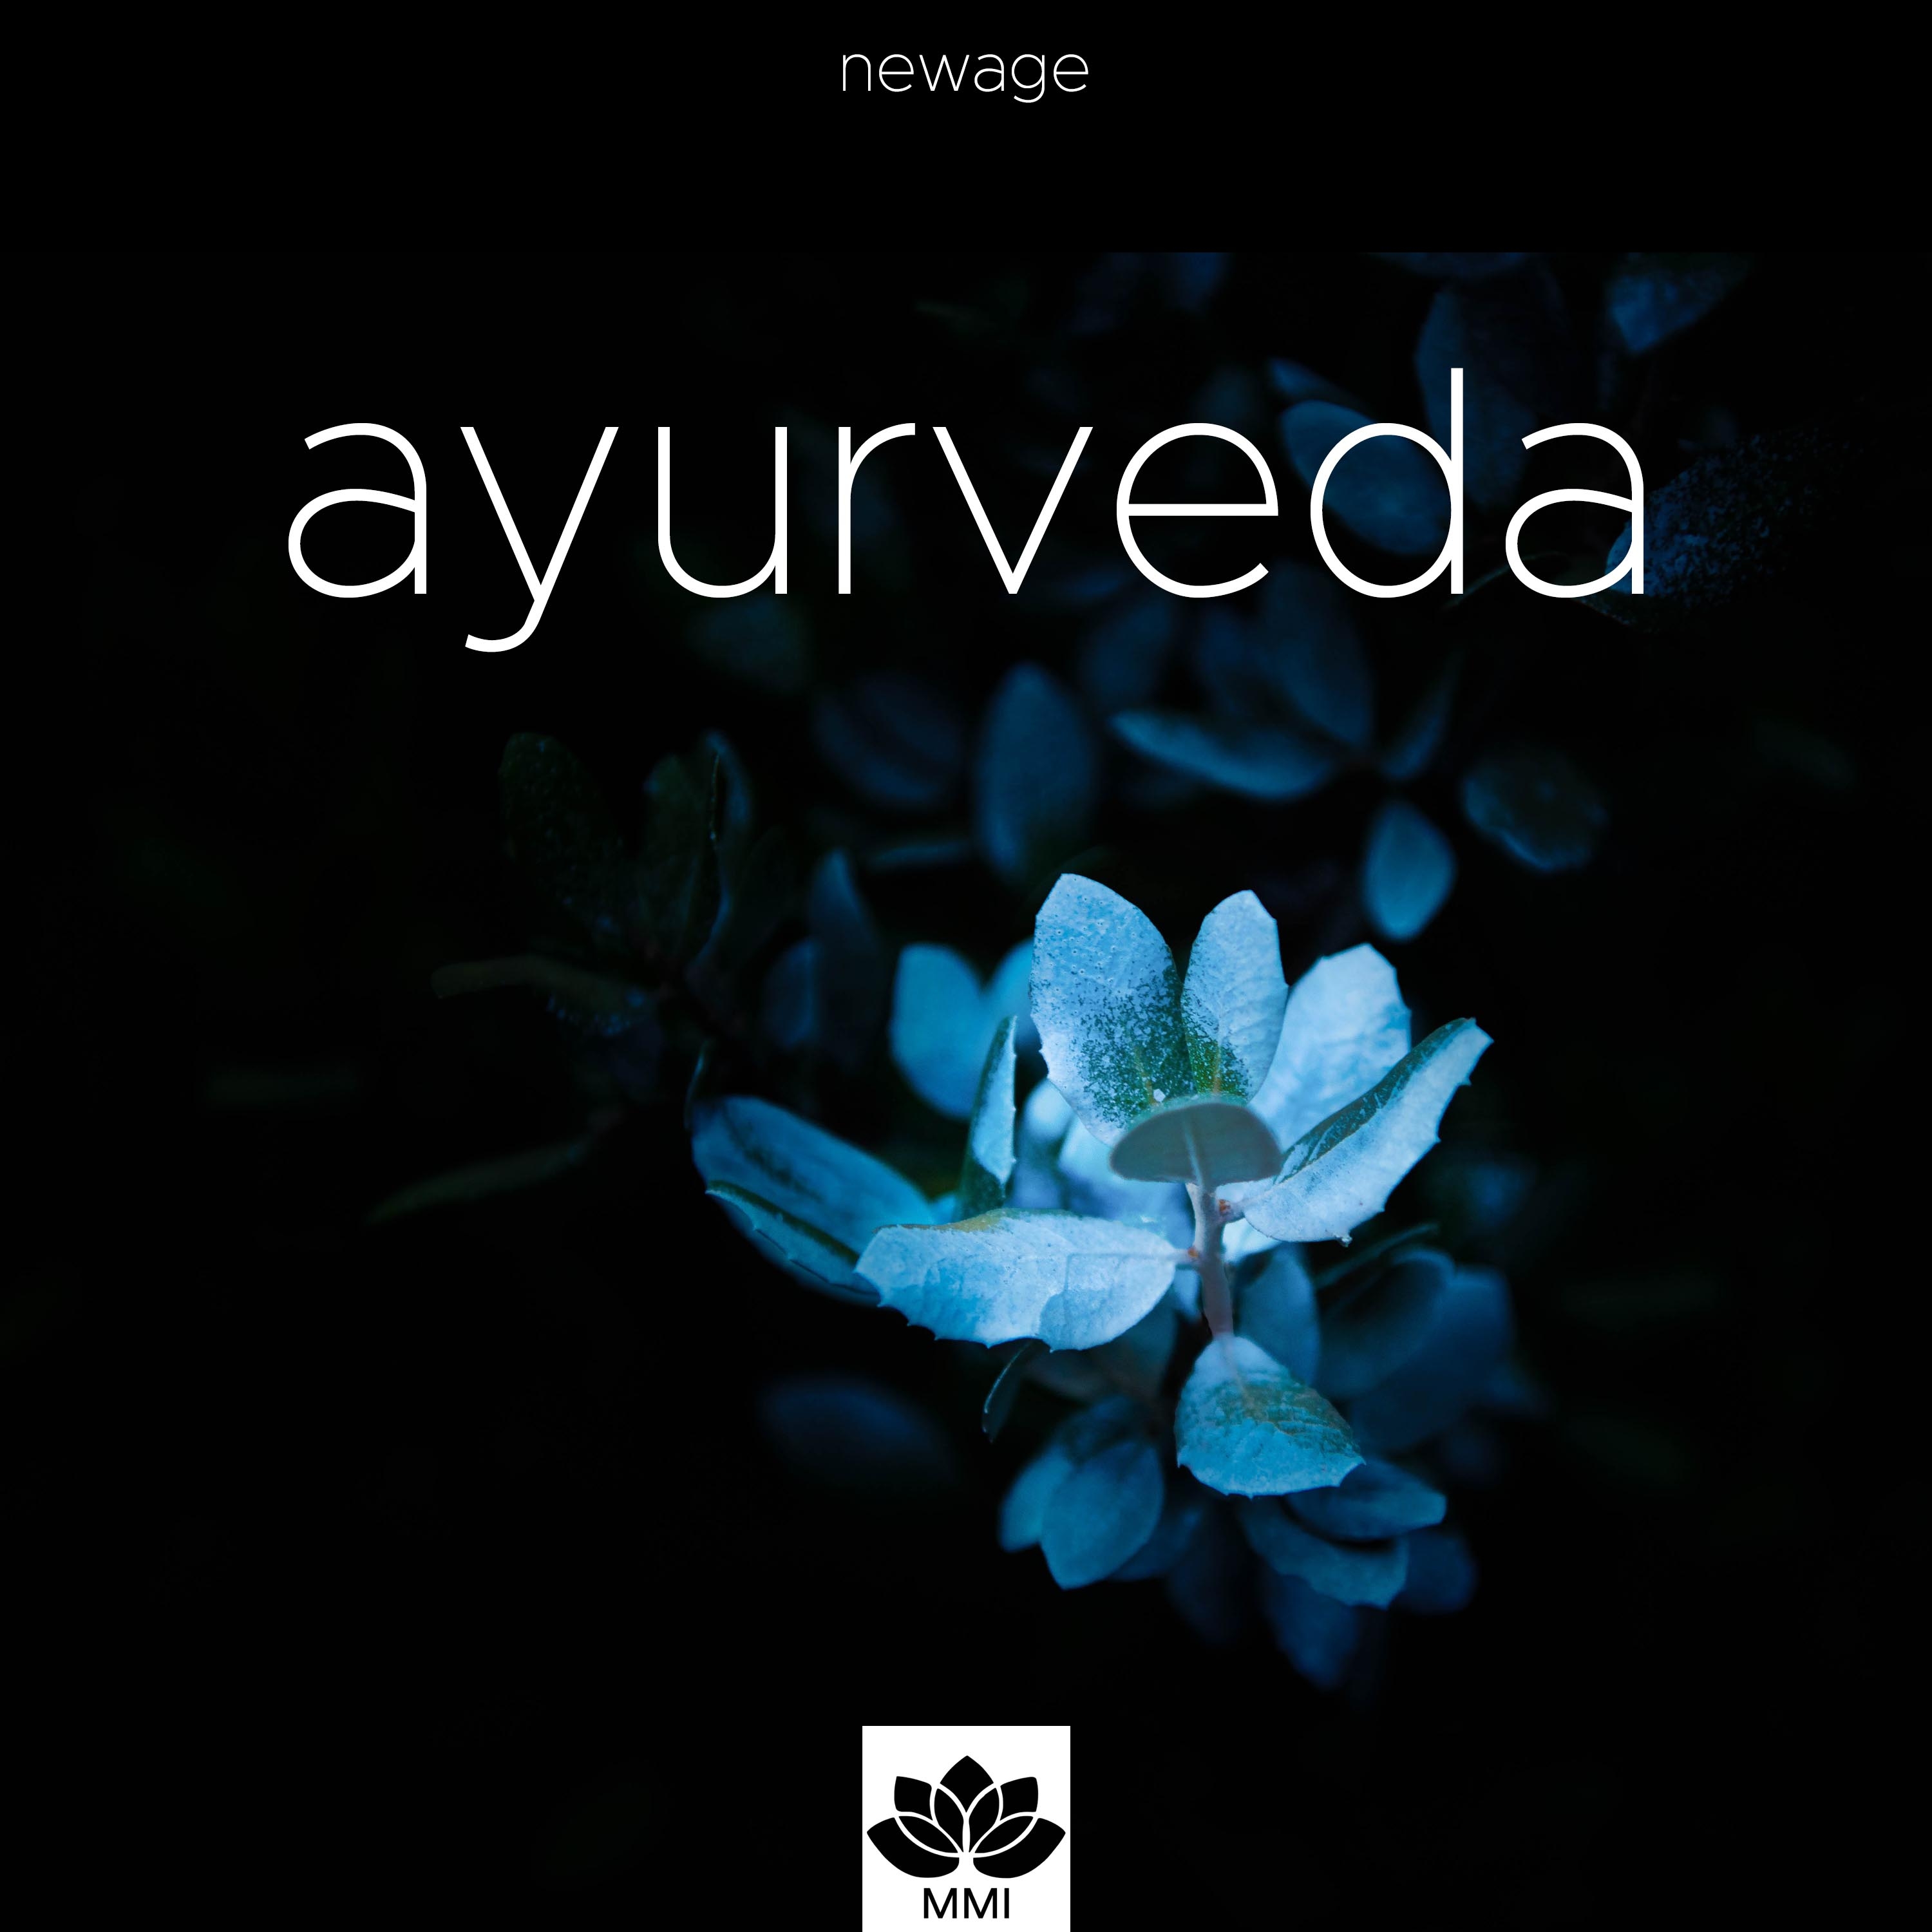 Ayurveda - Spa Music, Spiritual Songs, Zen Music with Nature Sounds